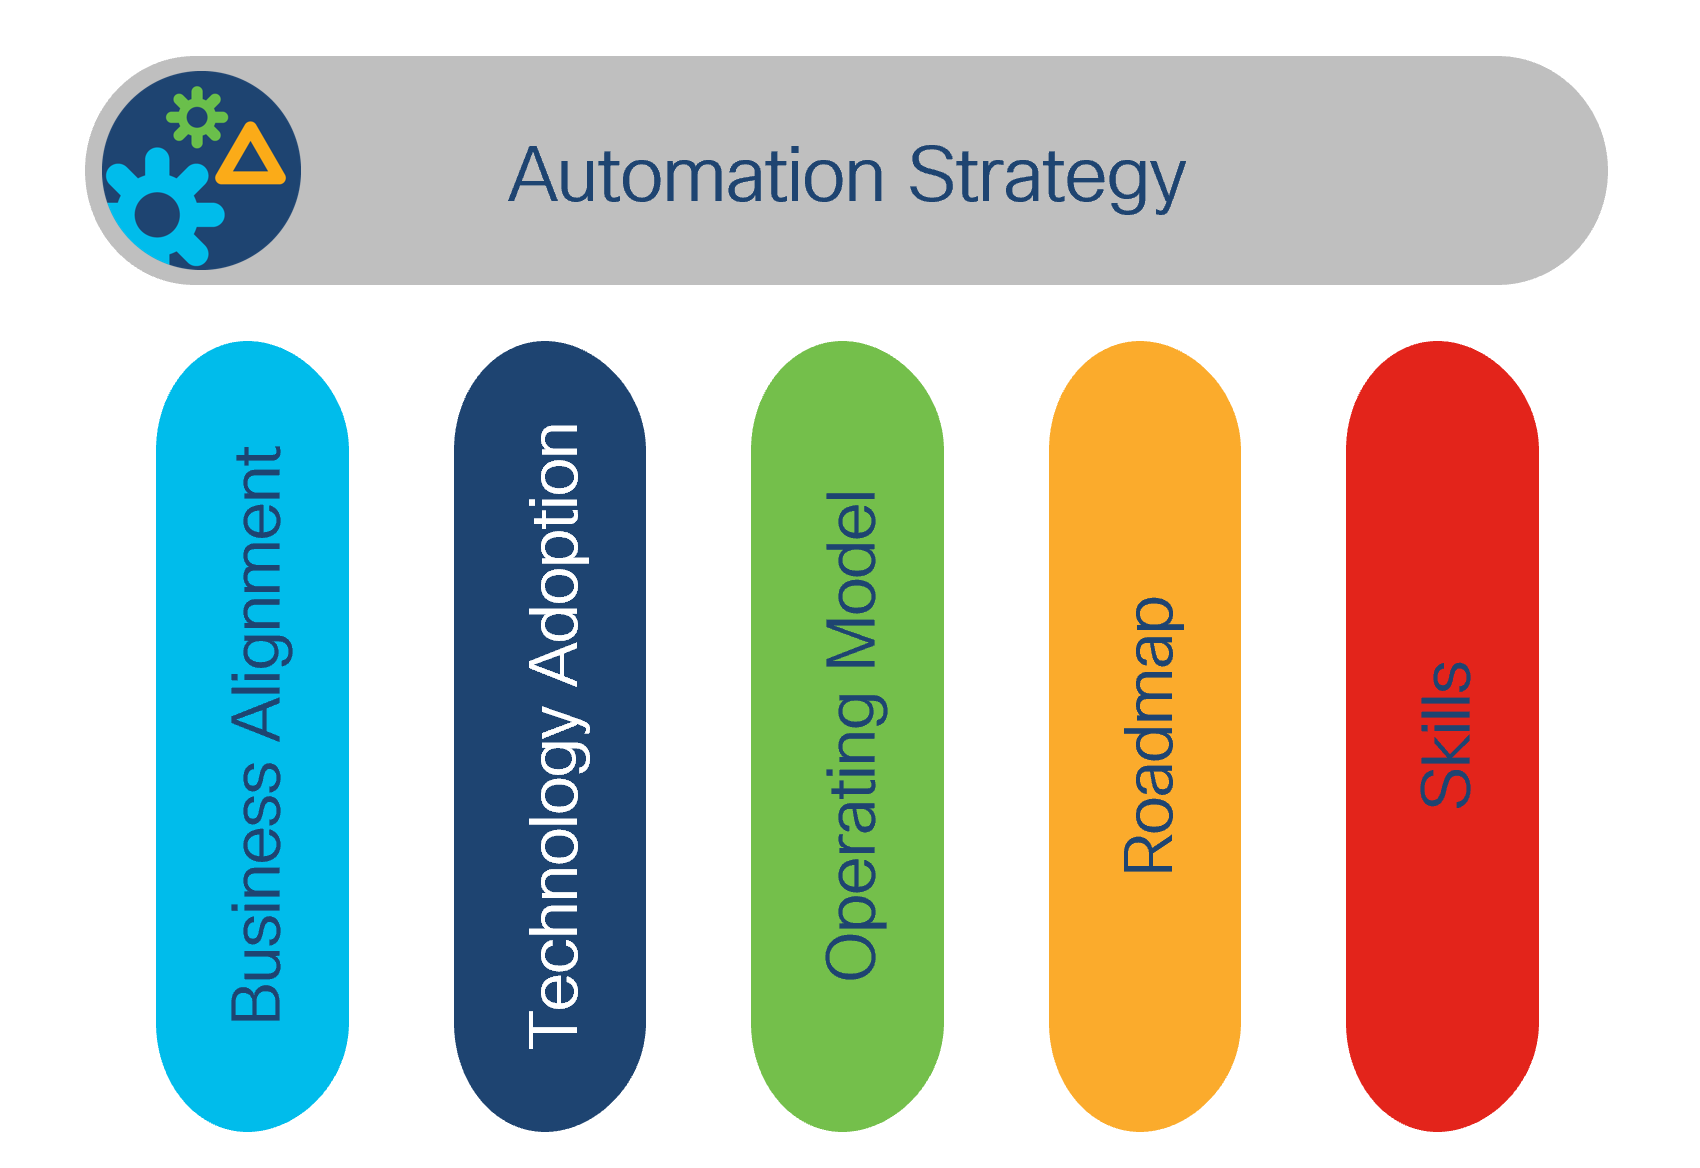 Automation Strategy Pillars